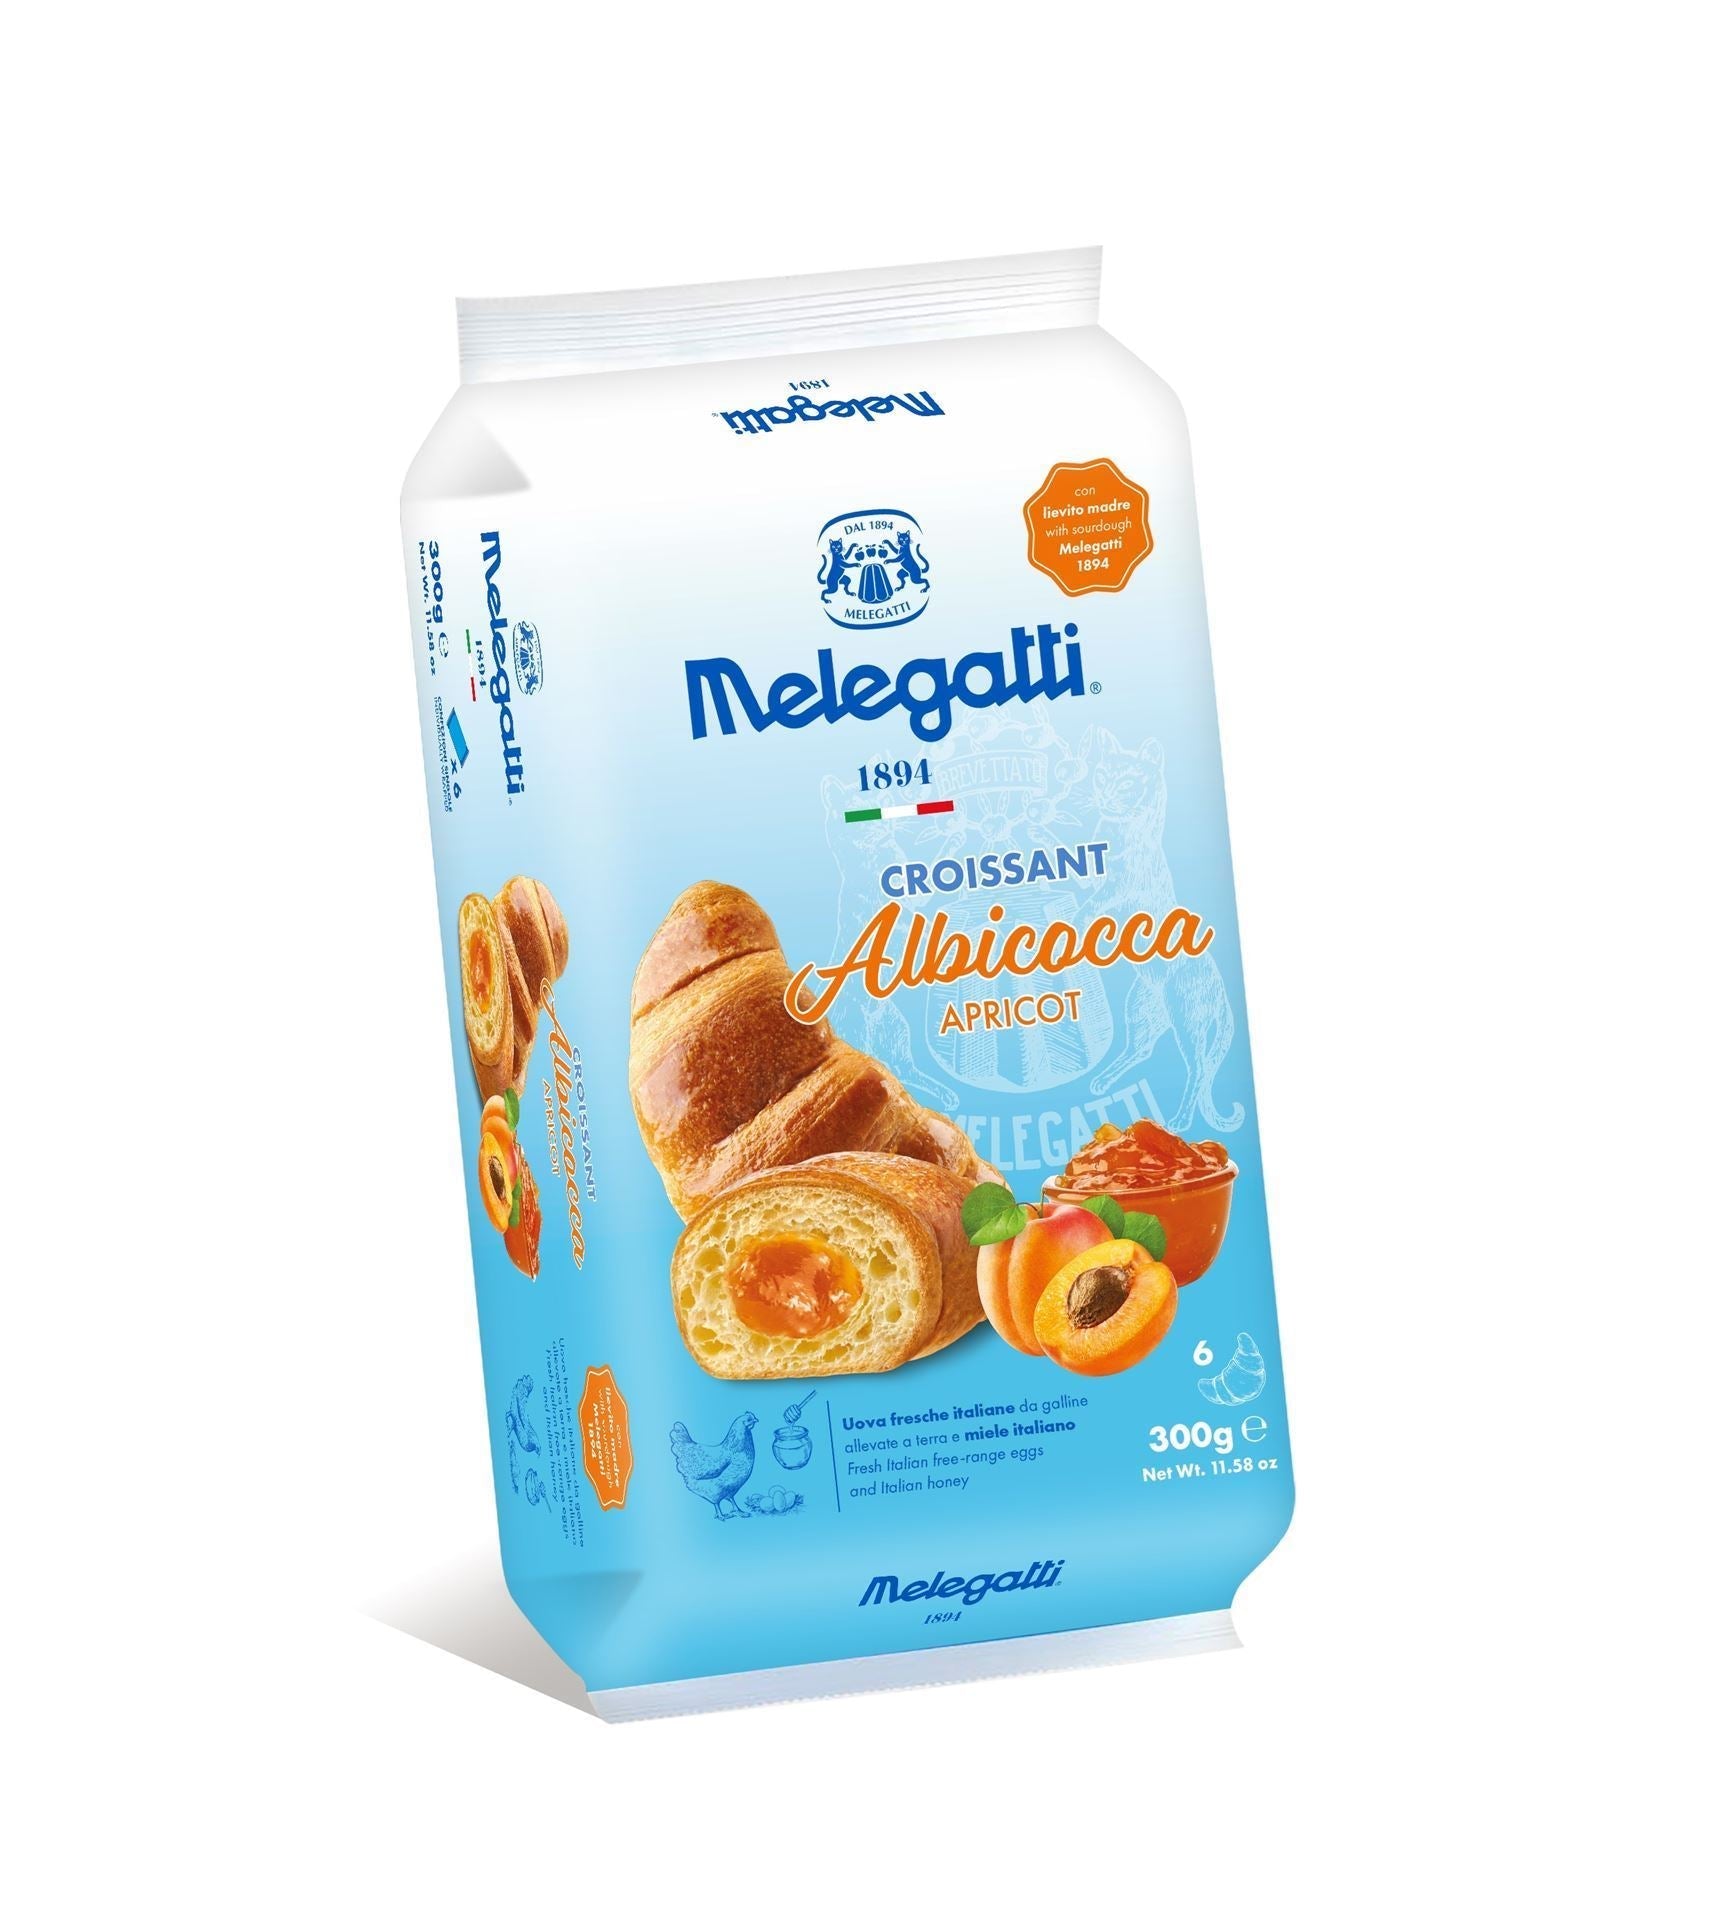 Melegatti Croissant täytetty albicoccassa 6 x50gr